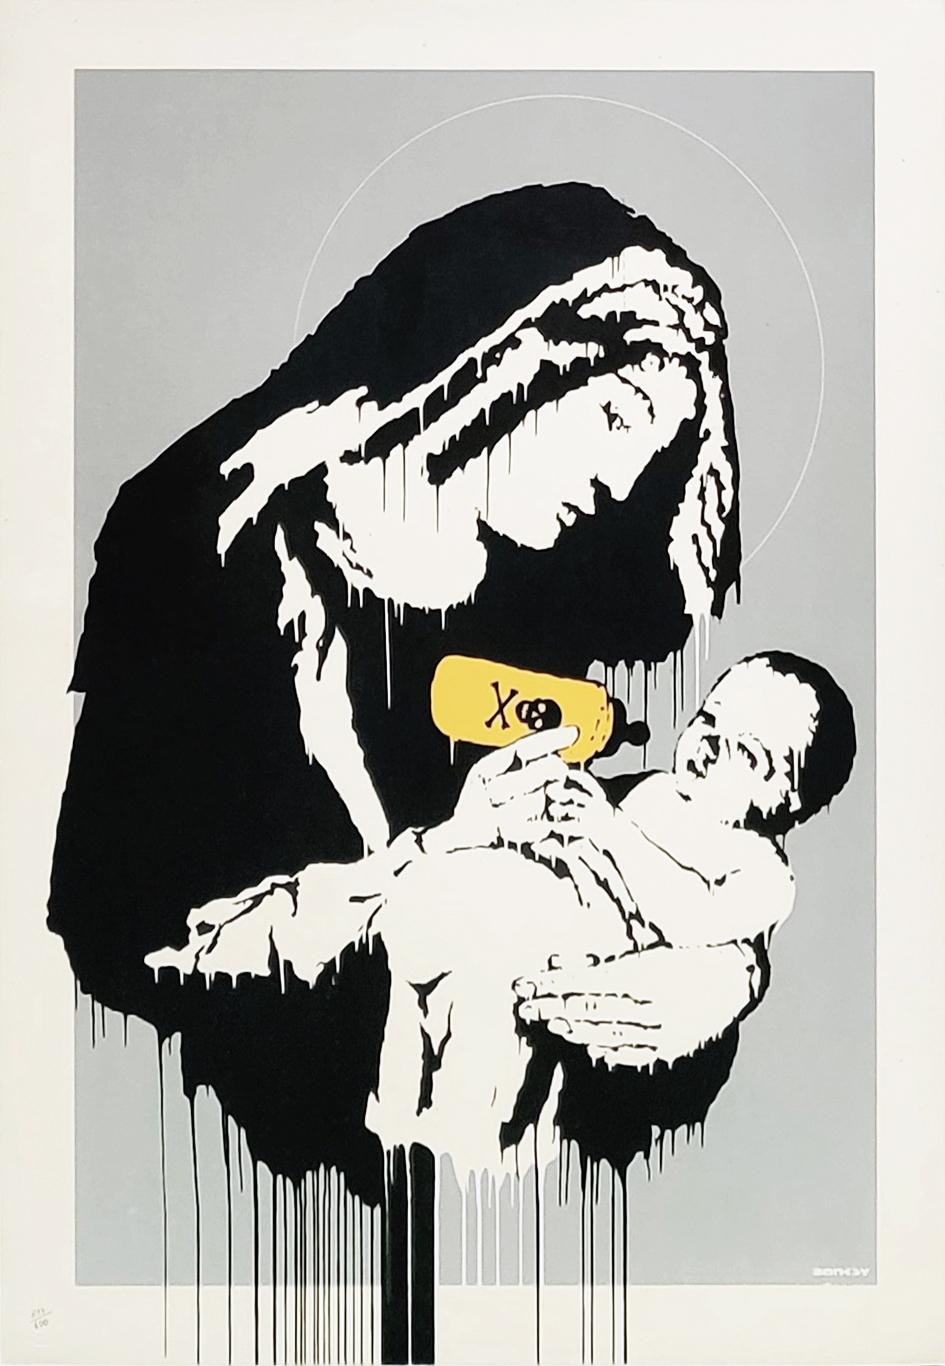 TOXIC MARY - Print by Banksy